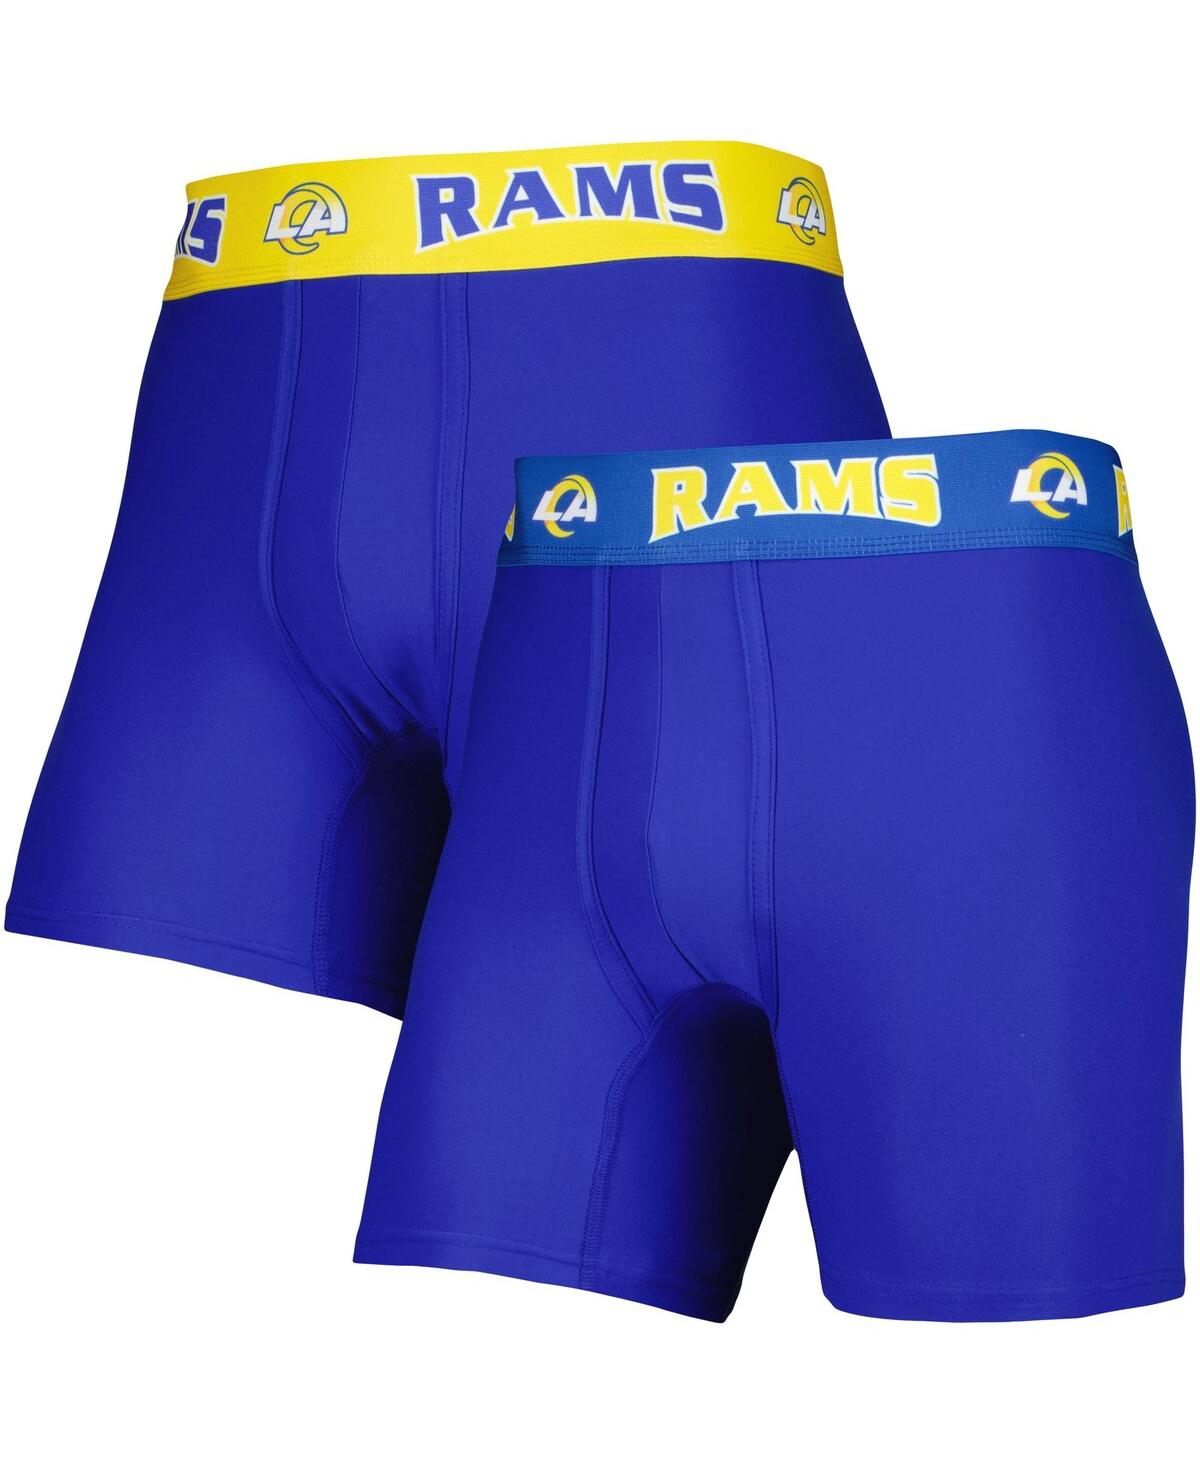 Men's Concepts Sport Royal, Gold Los Angeles Rams 2-Pack Boxer Briefs Set - Royal, Gold